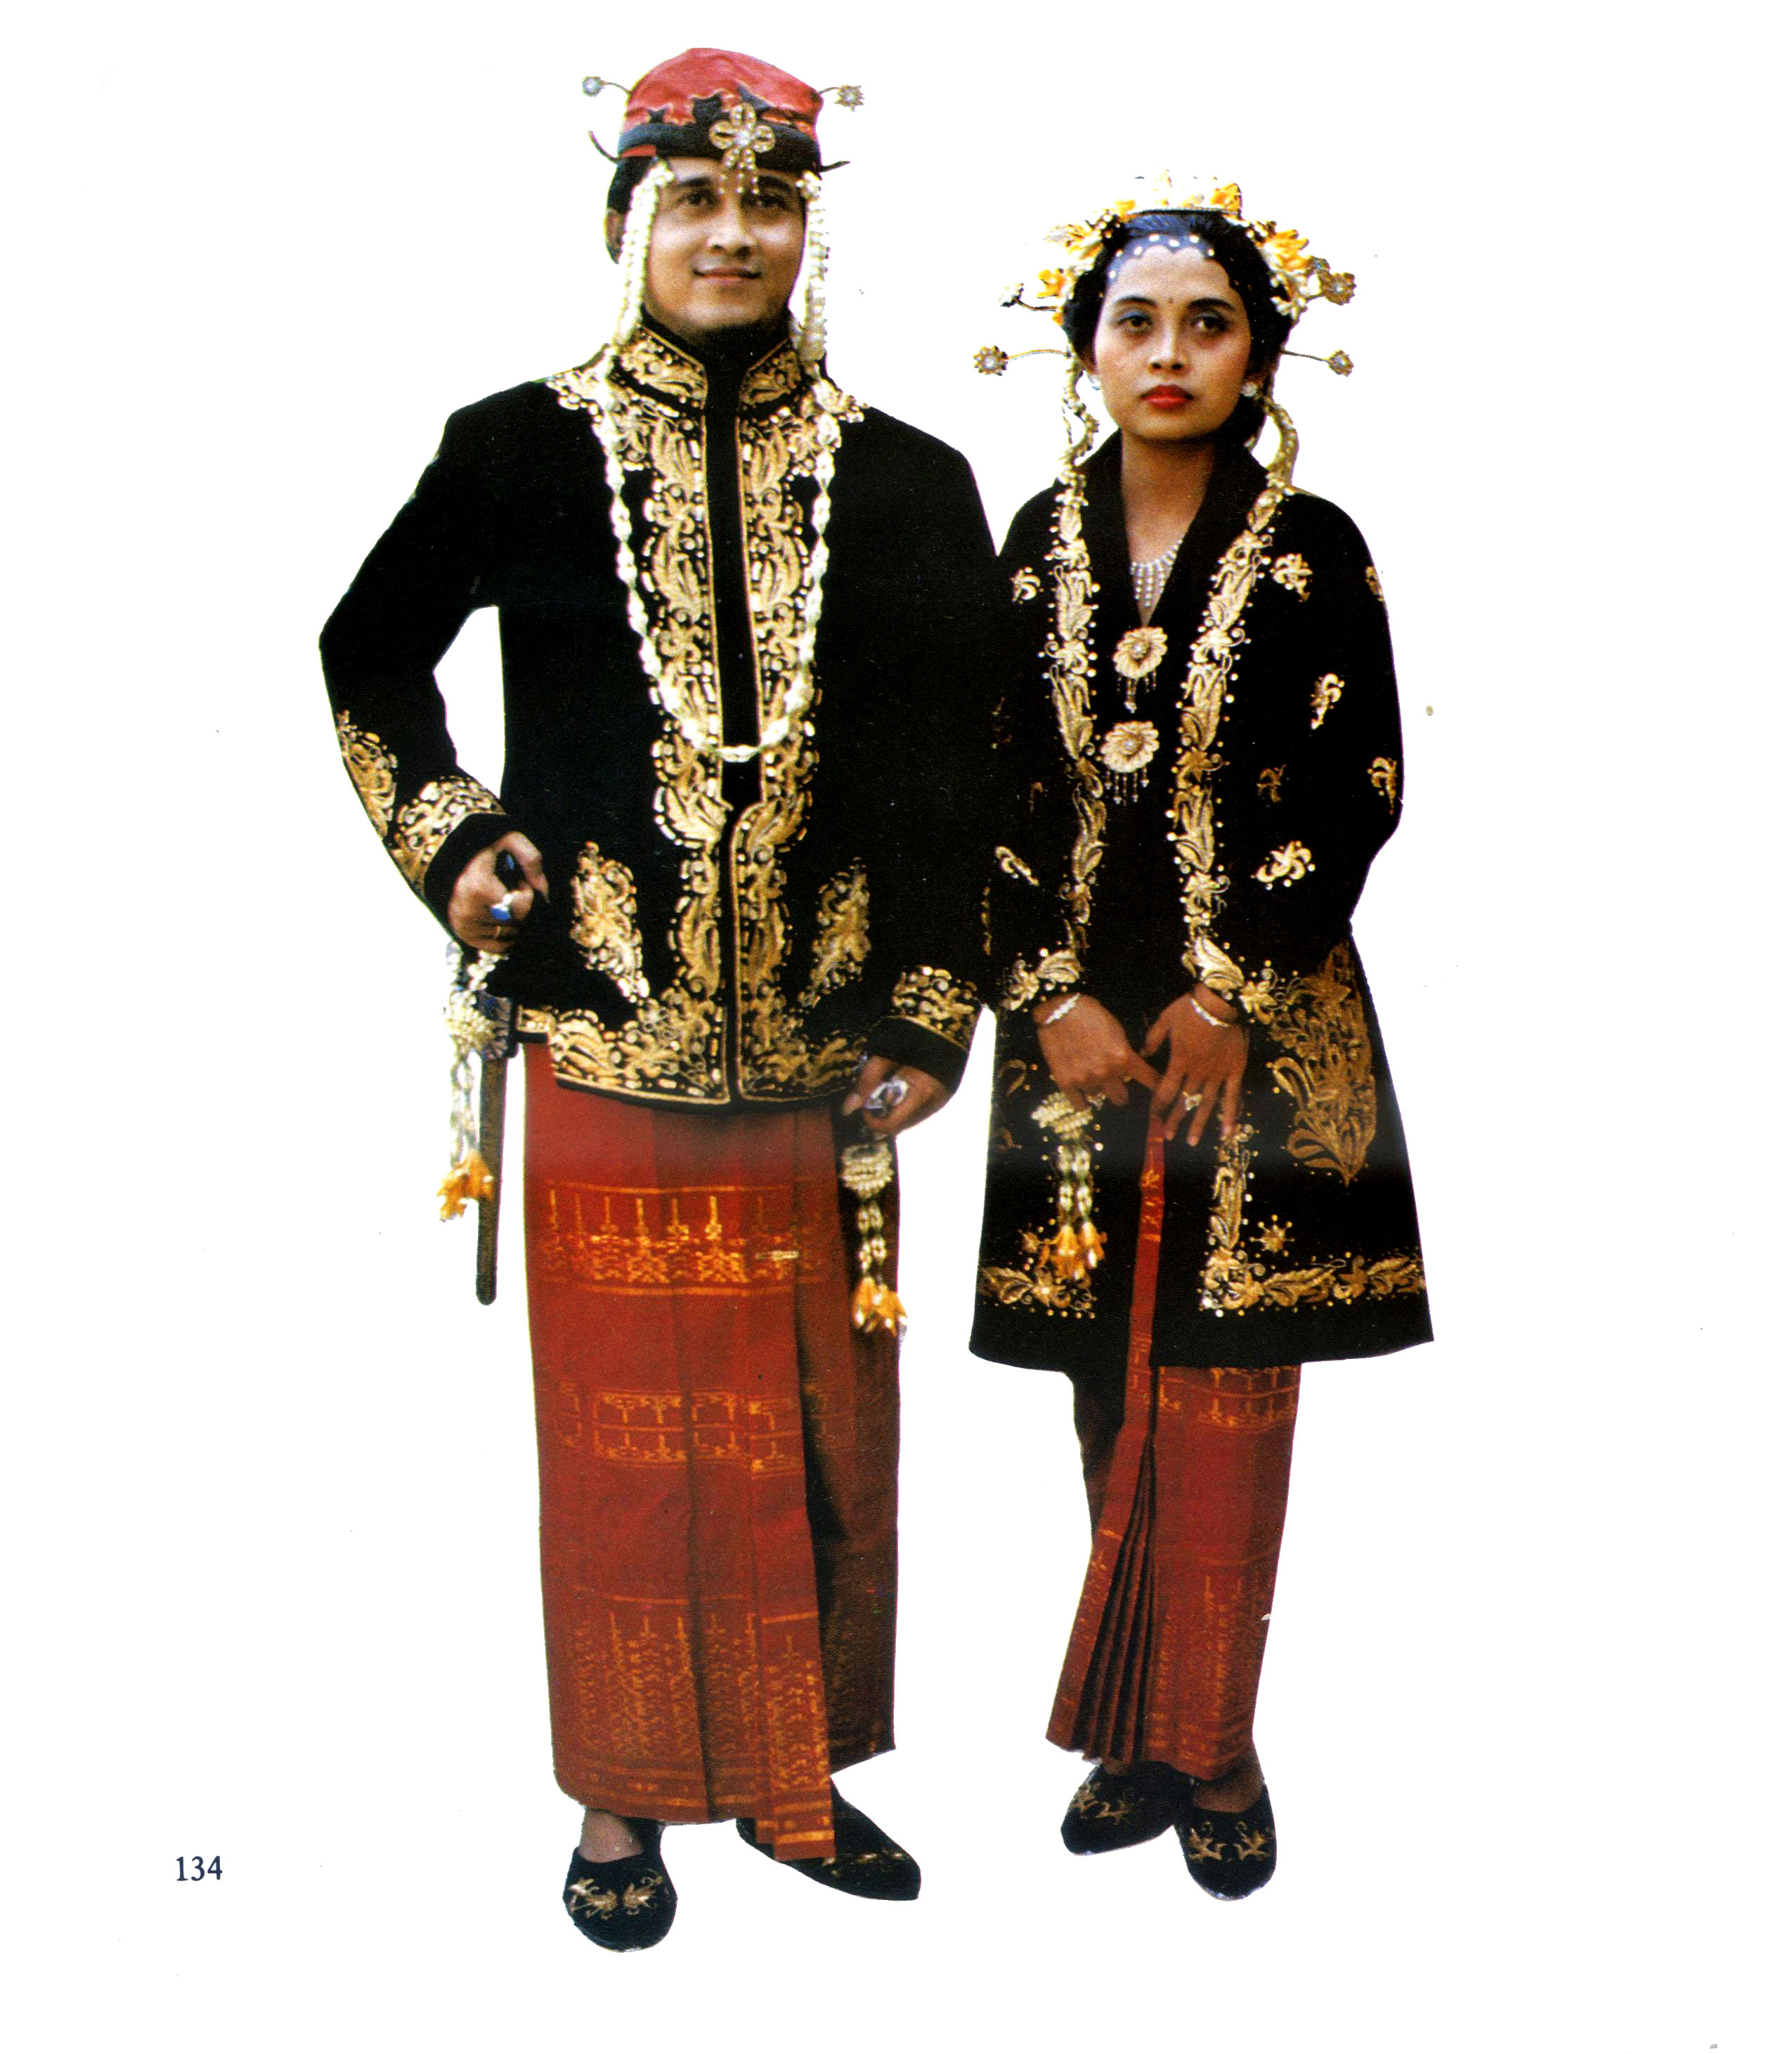 Inspirasi modis pembahasan pakaian adat tentang  19+ Pakaian Adat Malang Jawa Timur, Yang Banyak Di Carі!